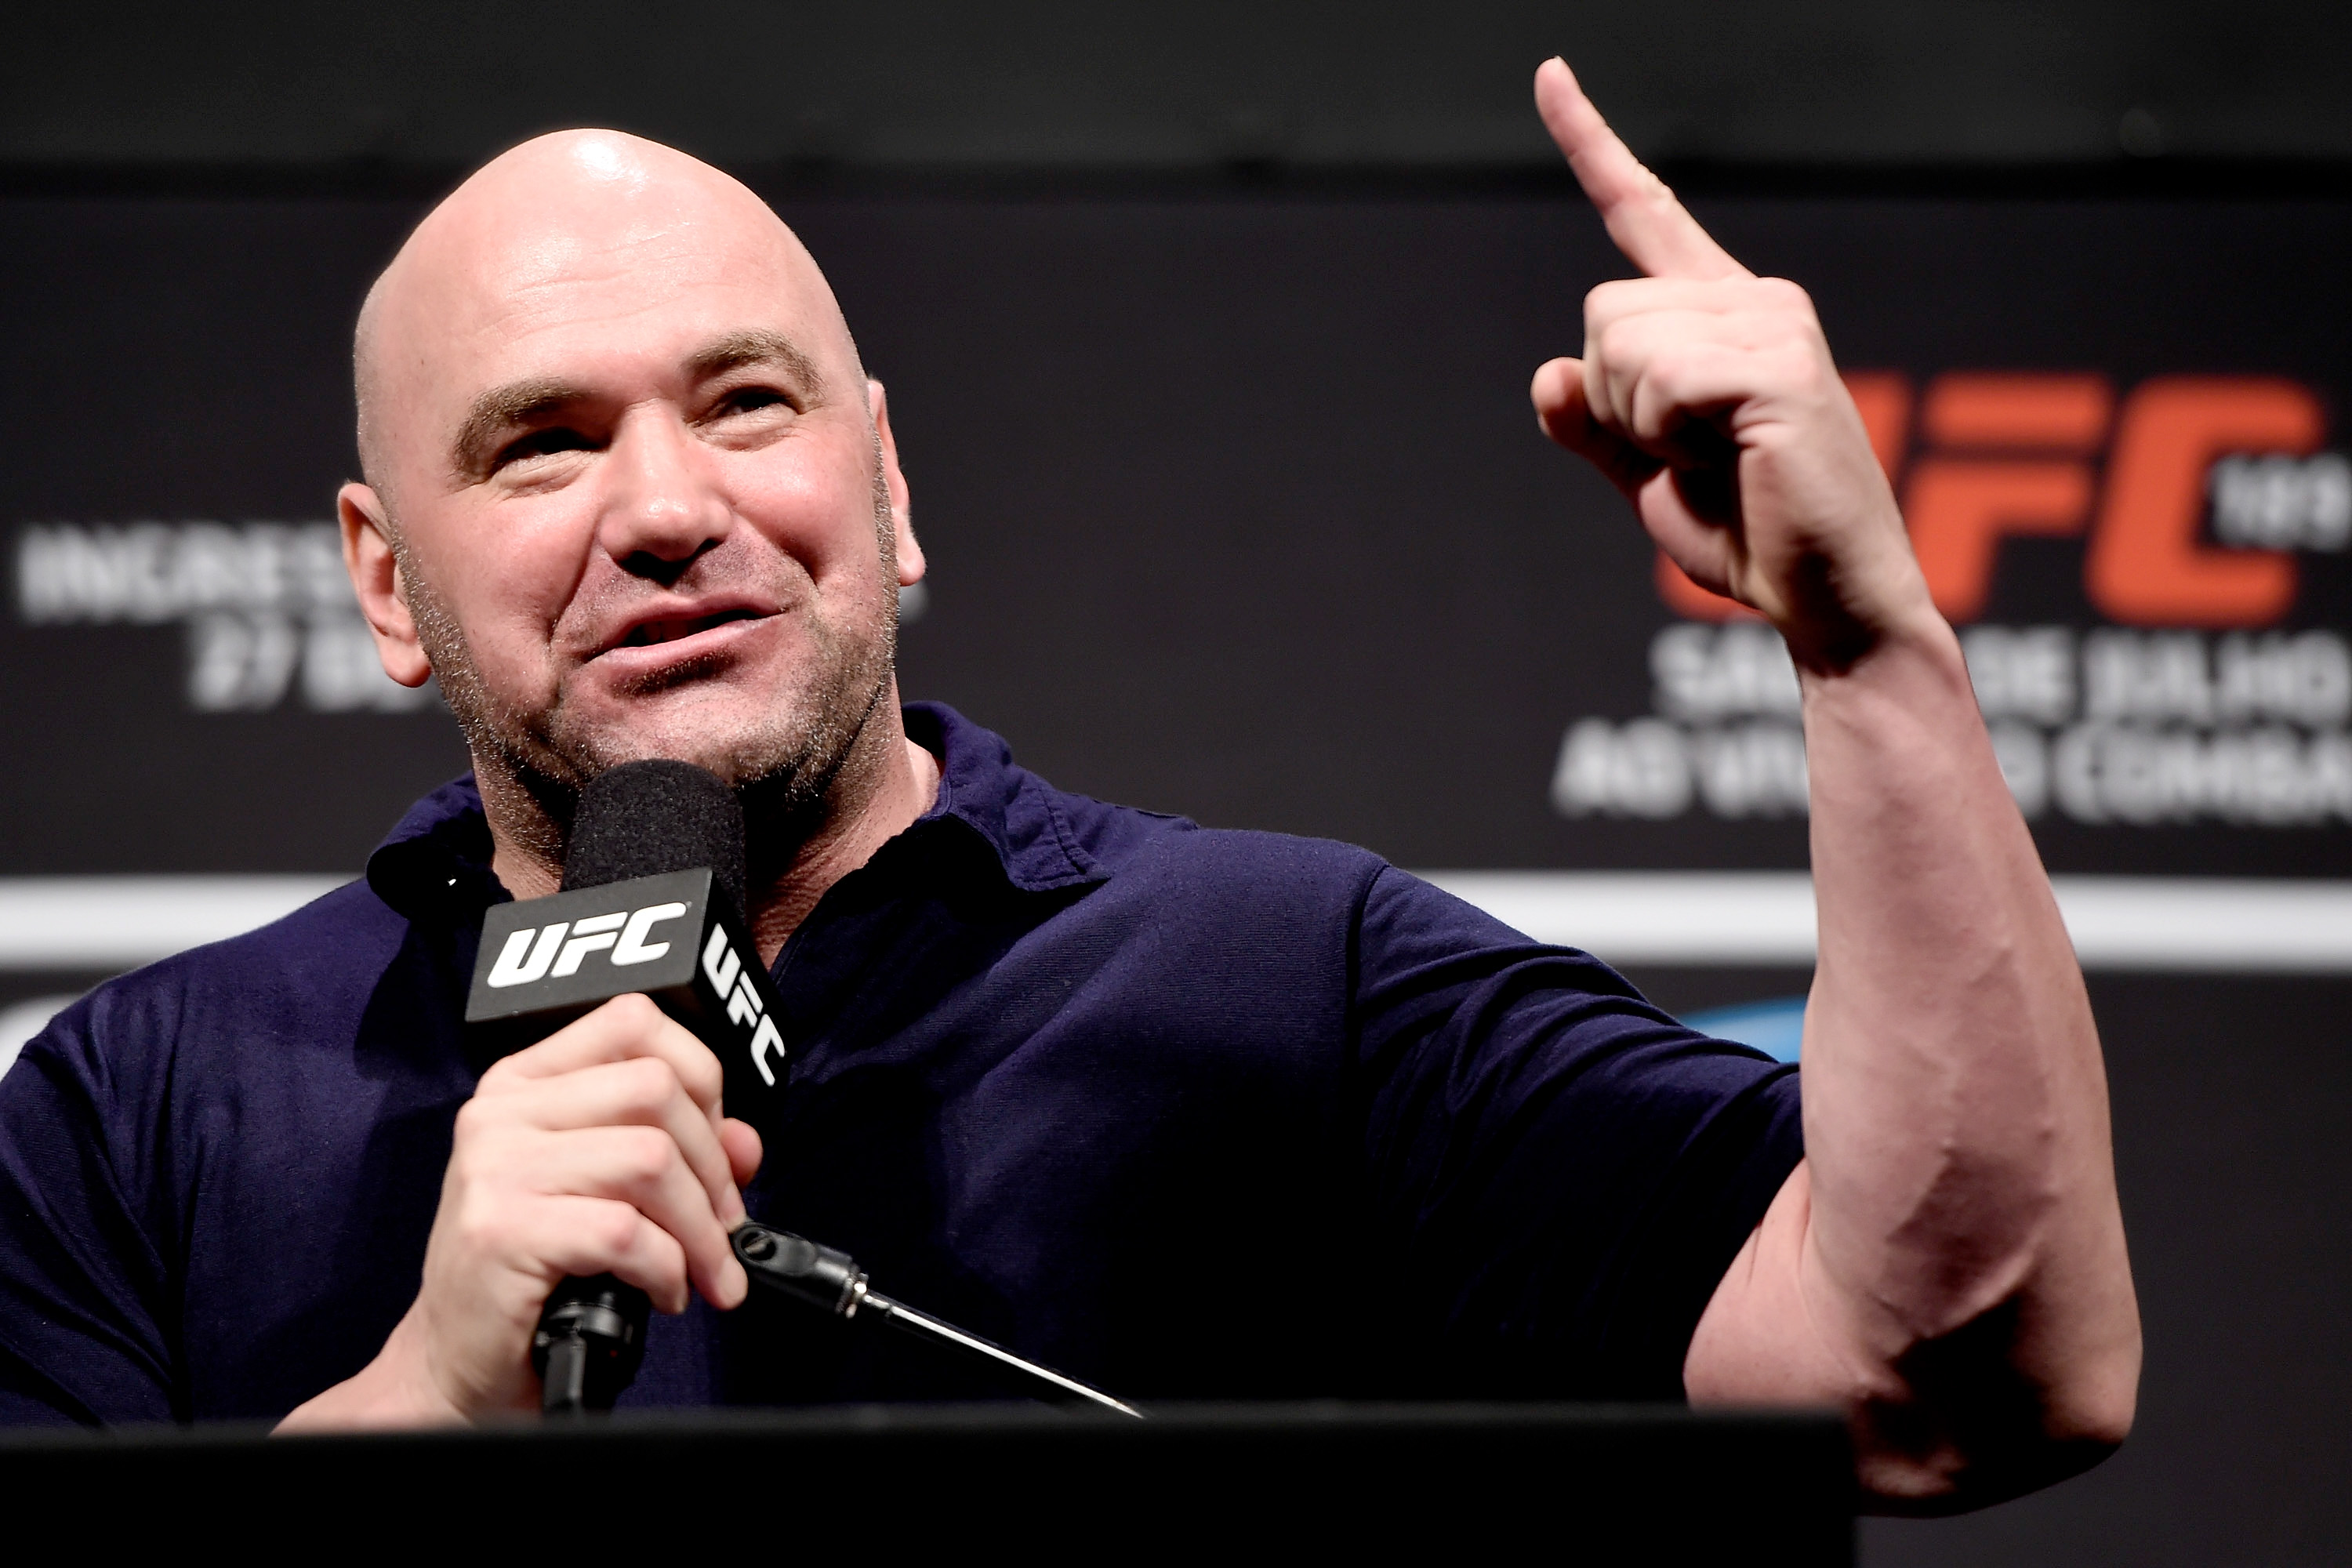 UFC President Dana White continues his profanity-laced tirades.